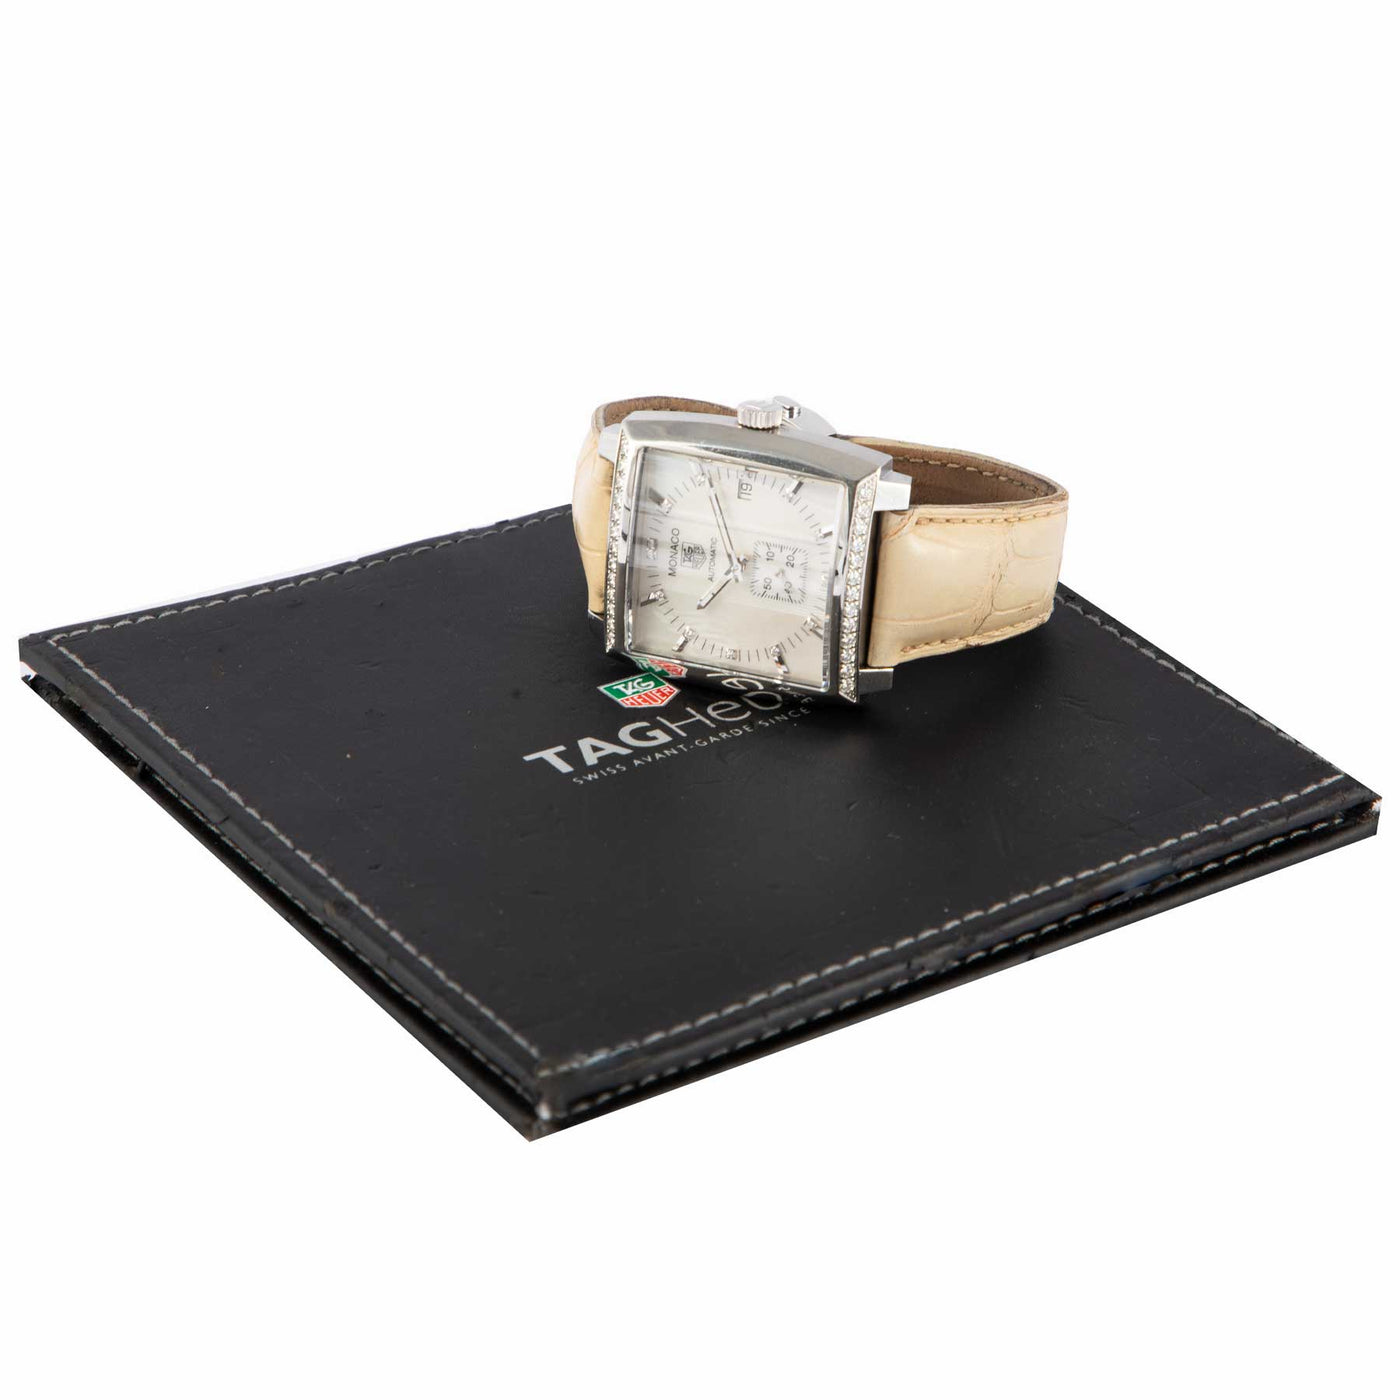 Monaco-Timepiece360